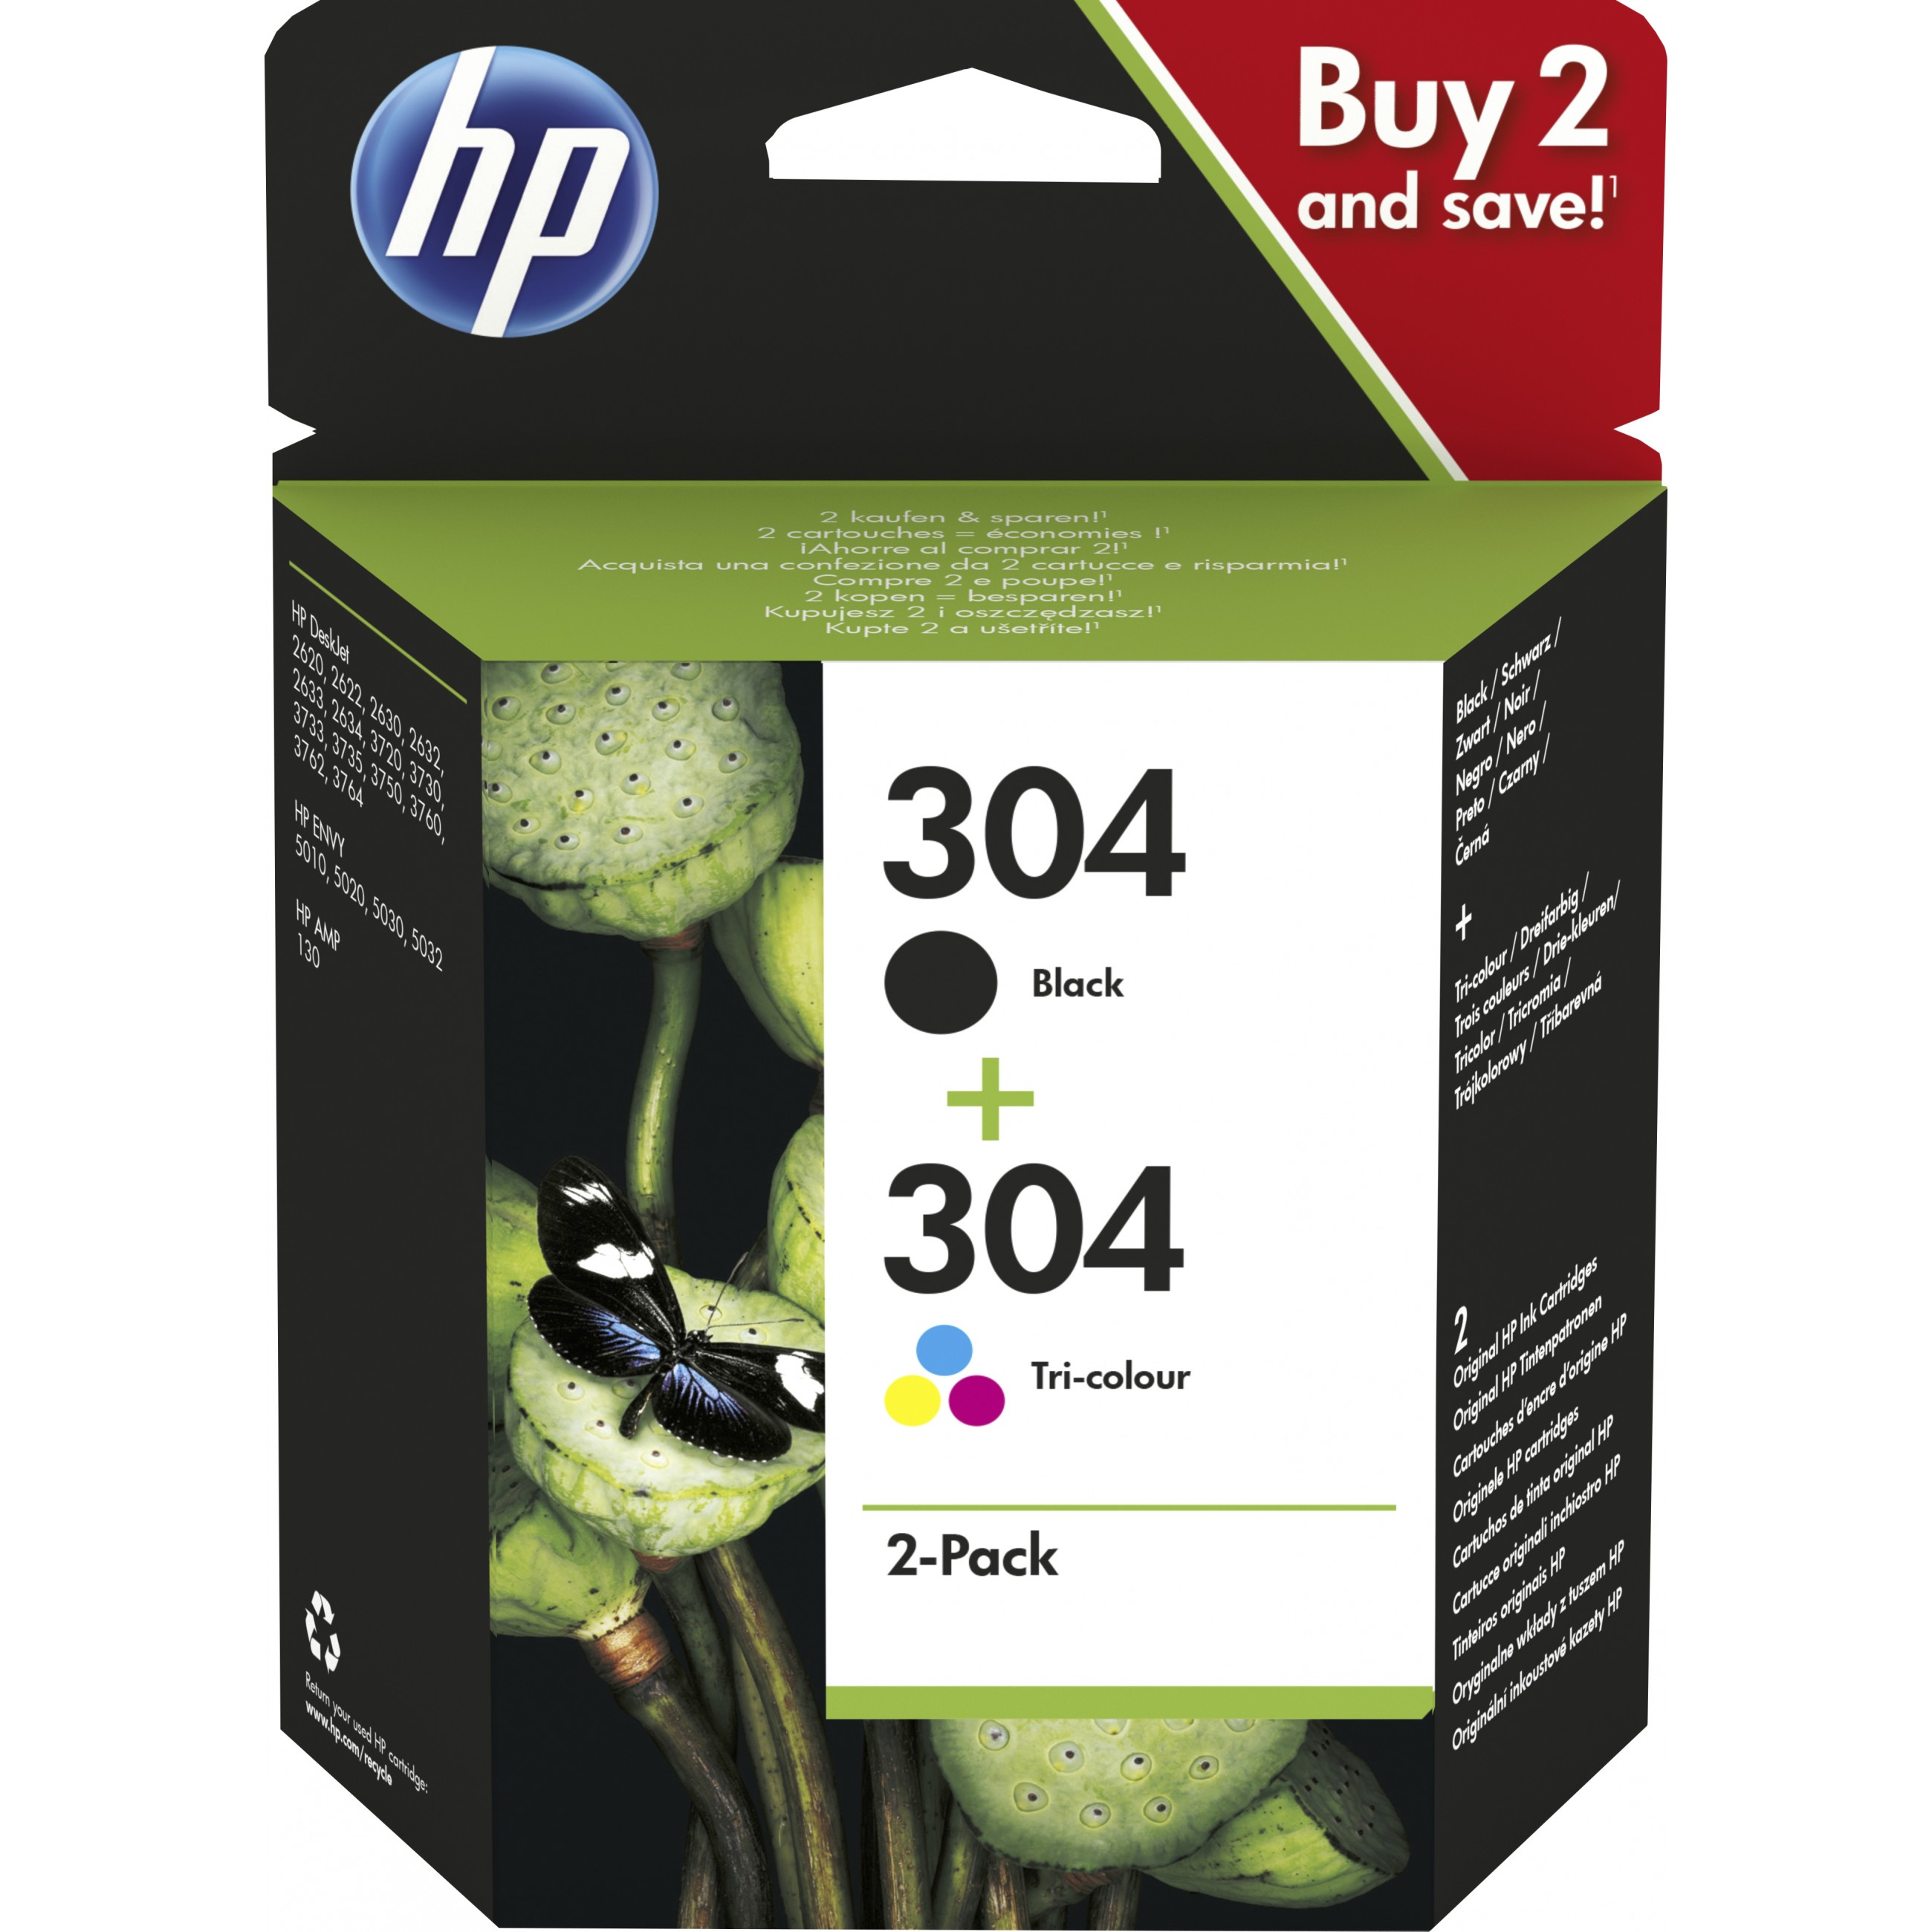 HP 304 2-pack Black/Tri-color Original Ink Cartridges ink cartridge